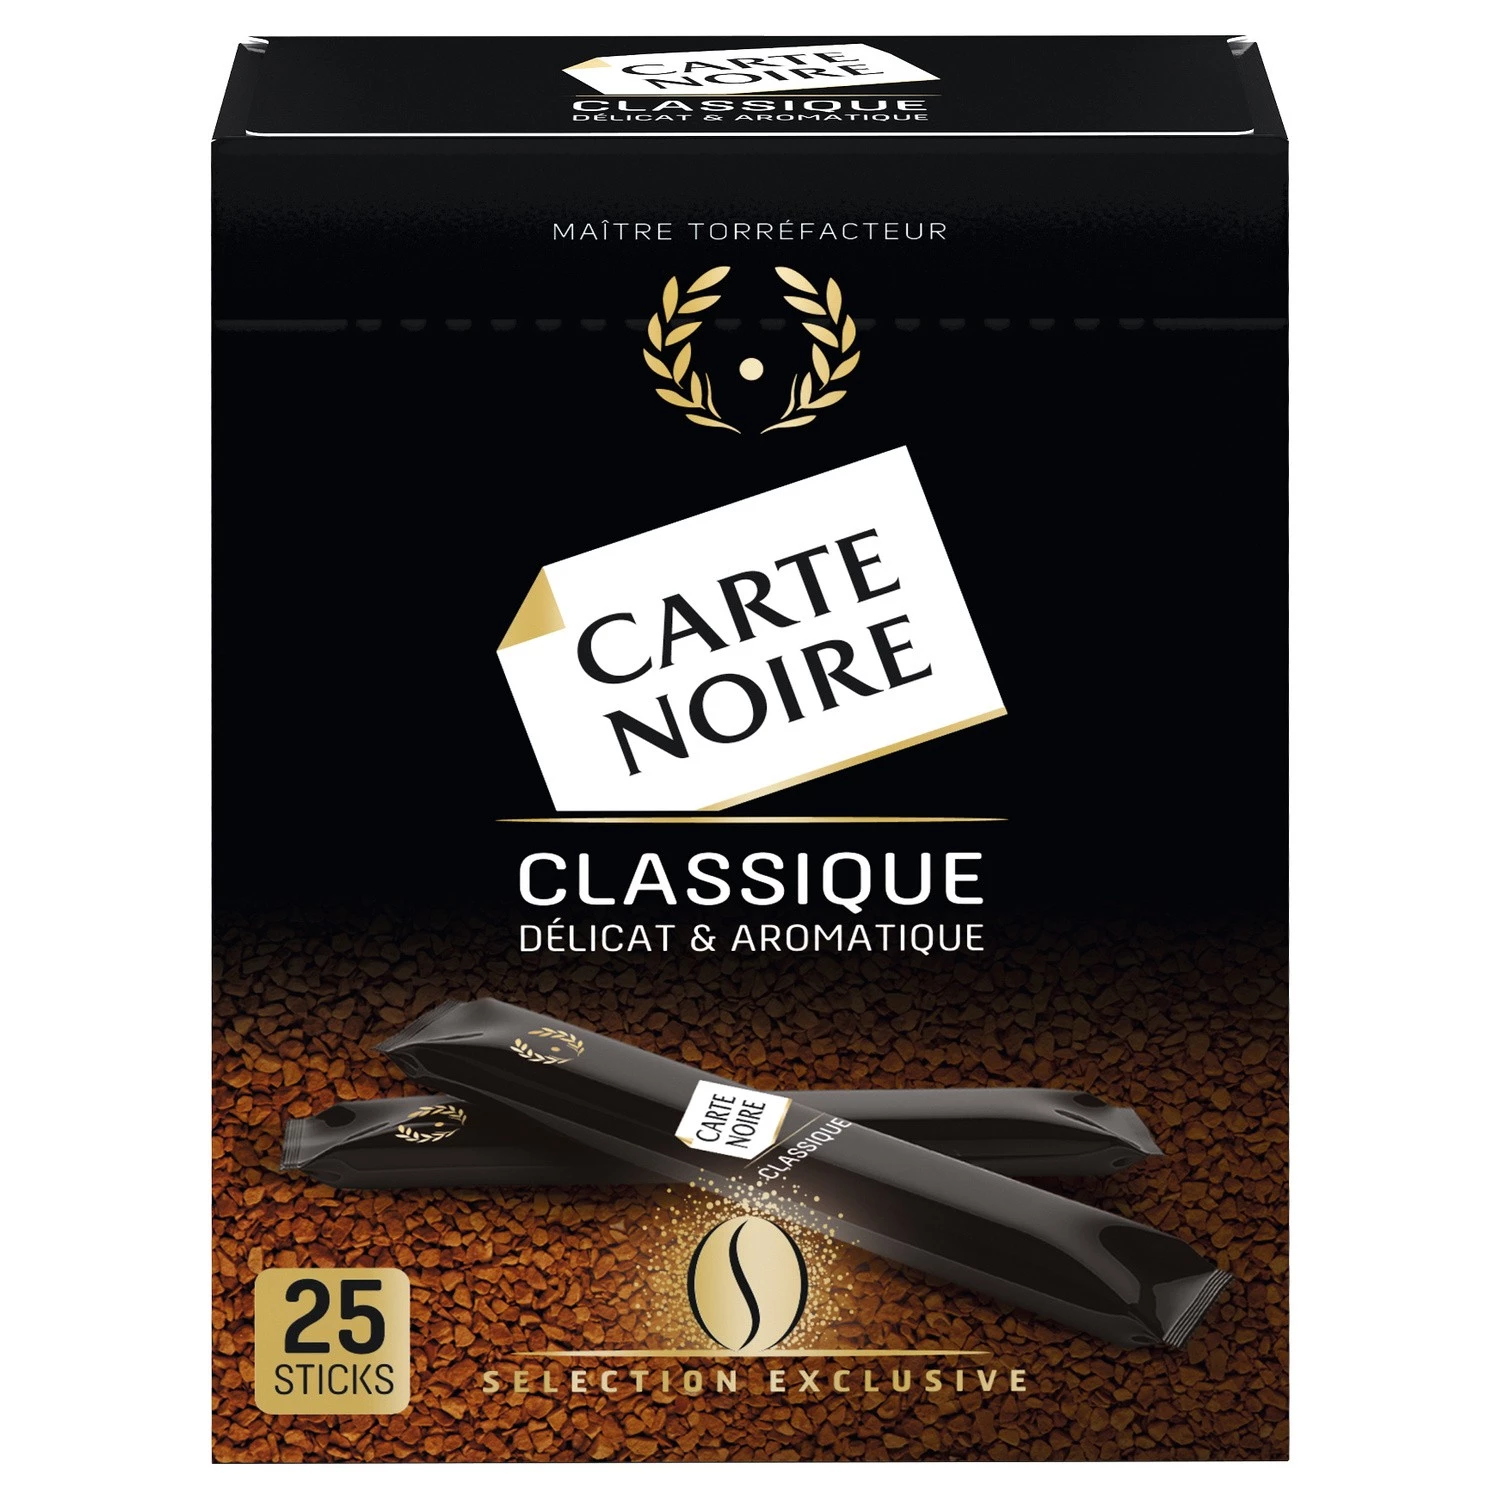 Klassieke oploskoffie x25 sticks 45g - CARTE NOIRE